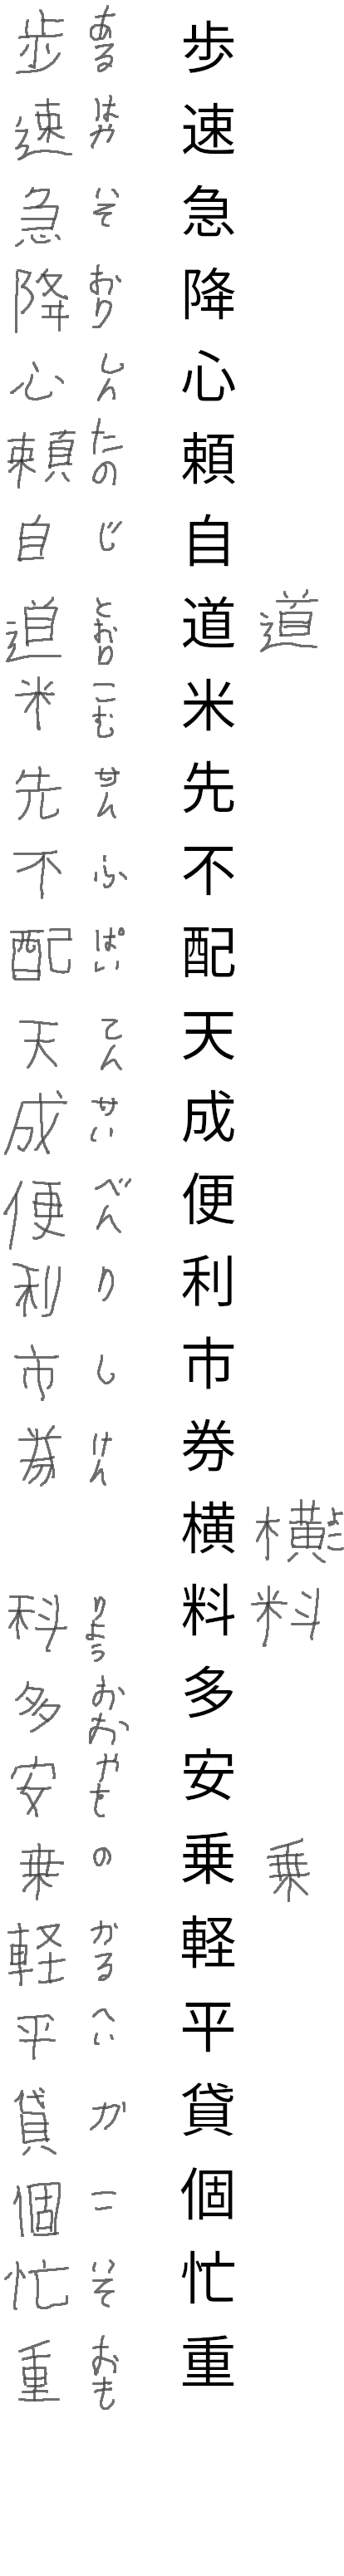 kanji test row 19